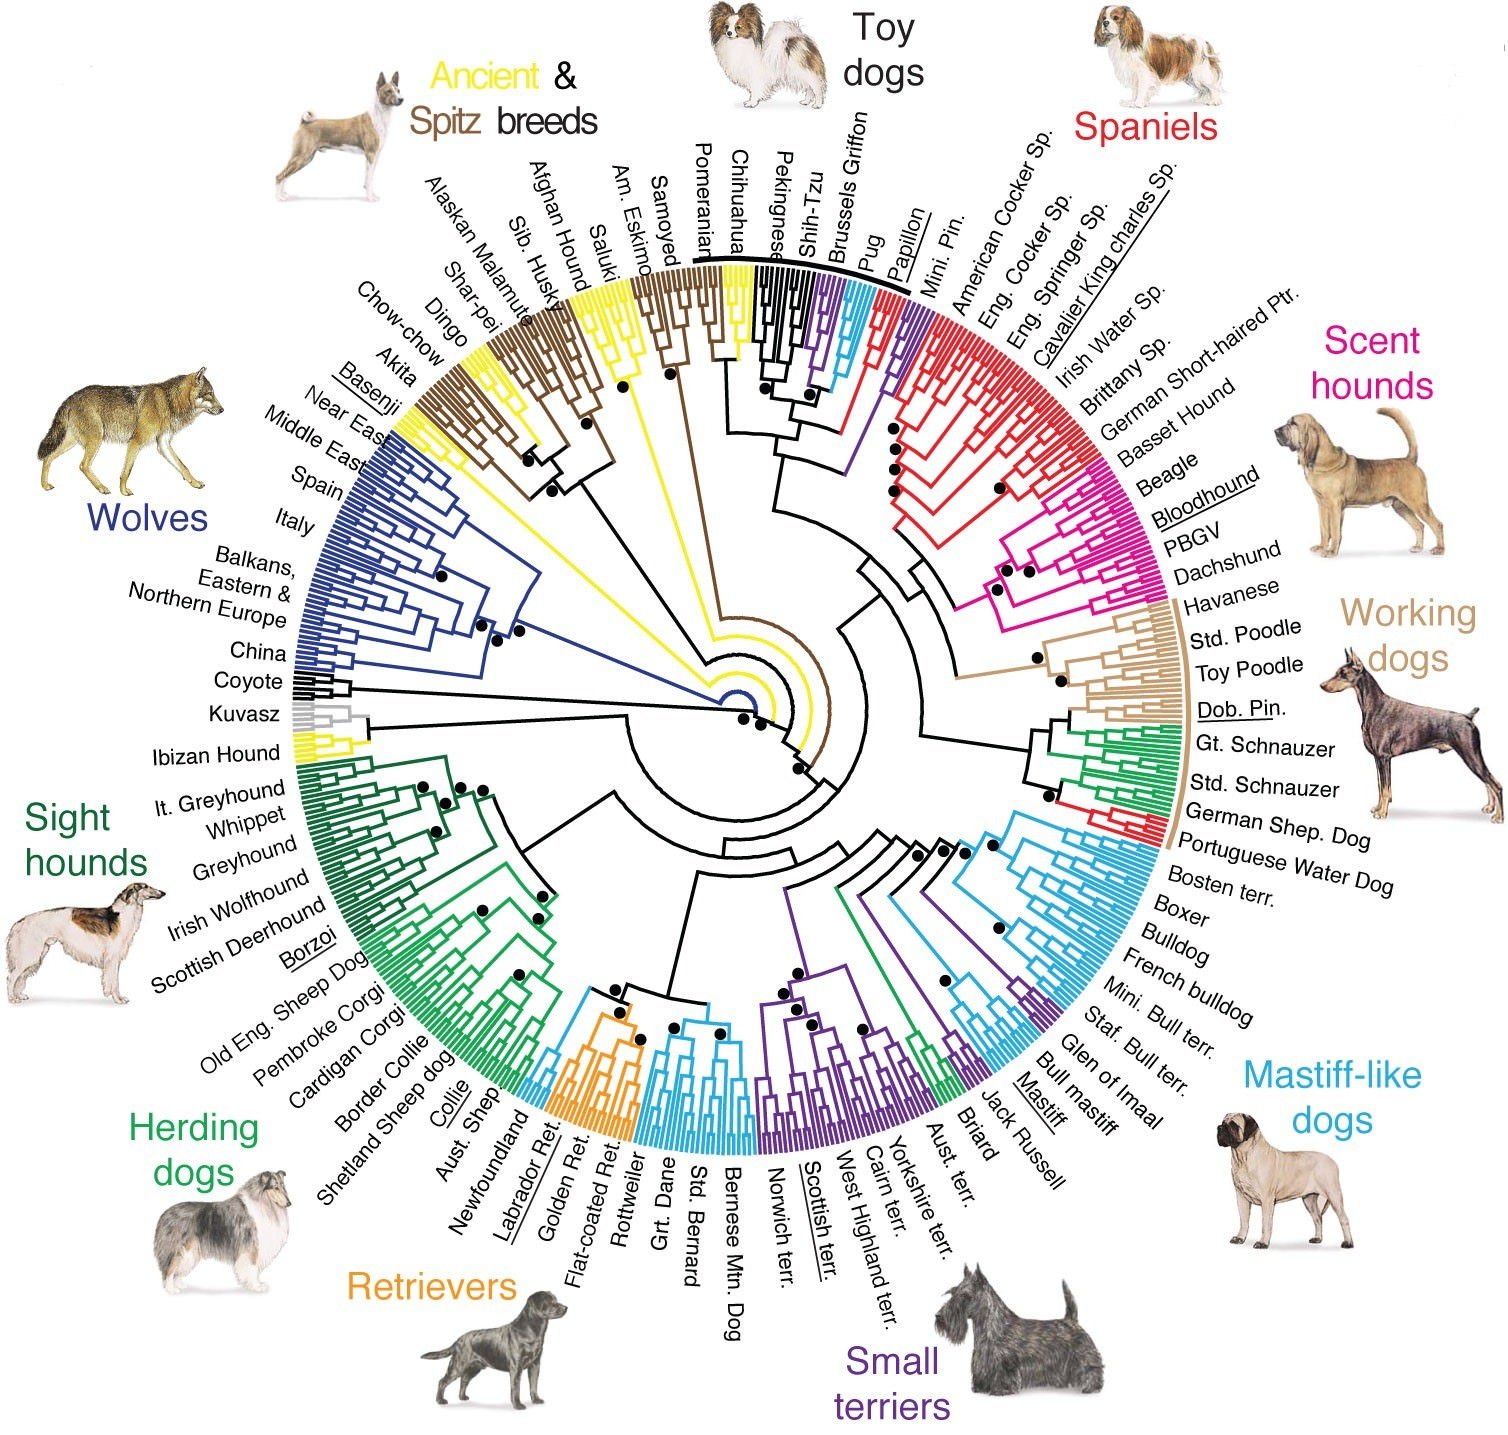 how did dog breeds evolve